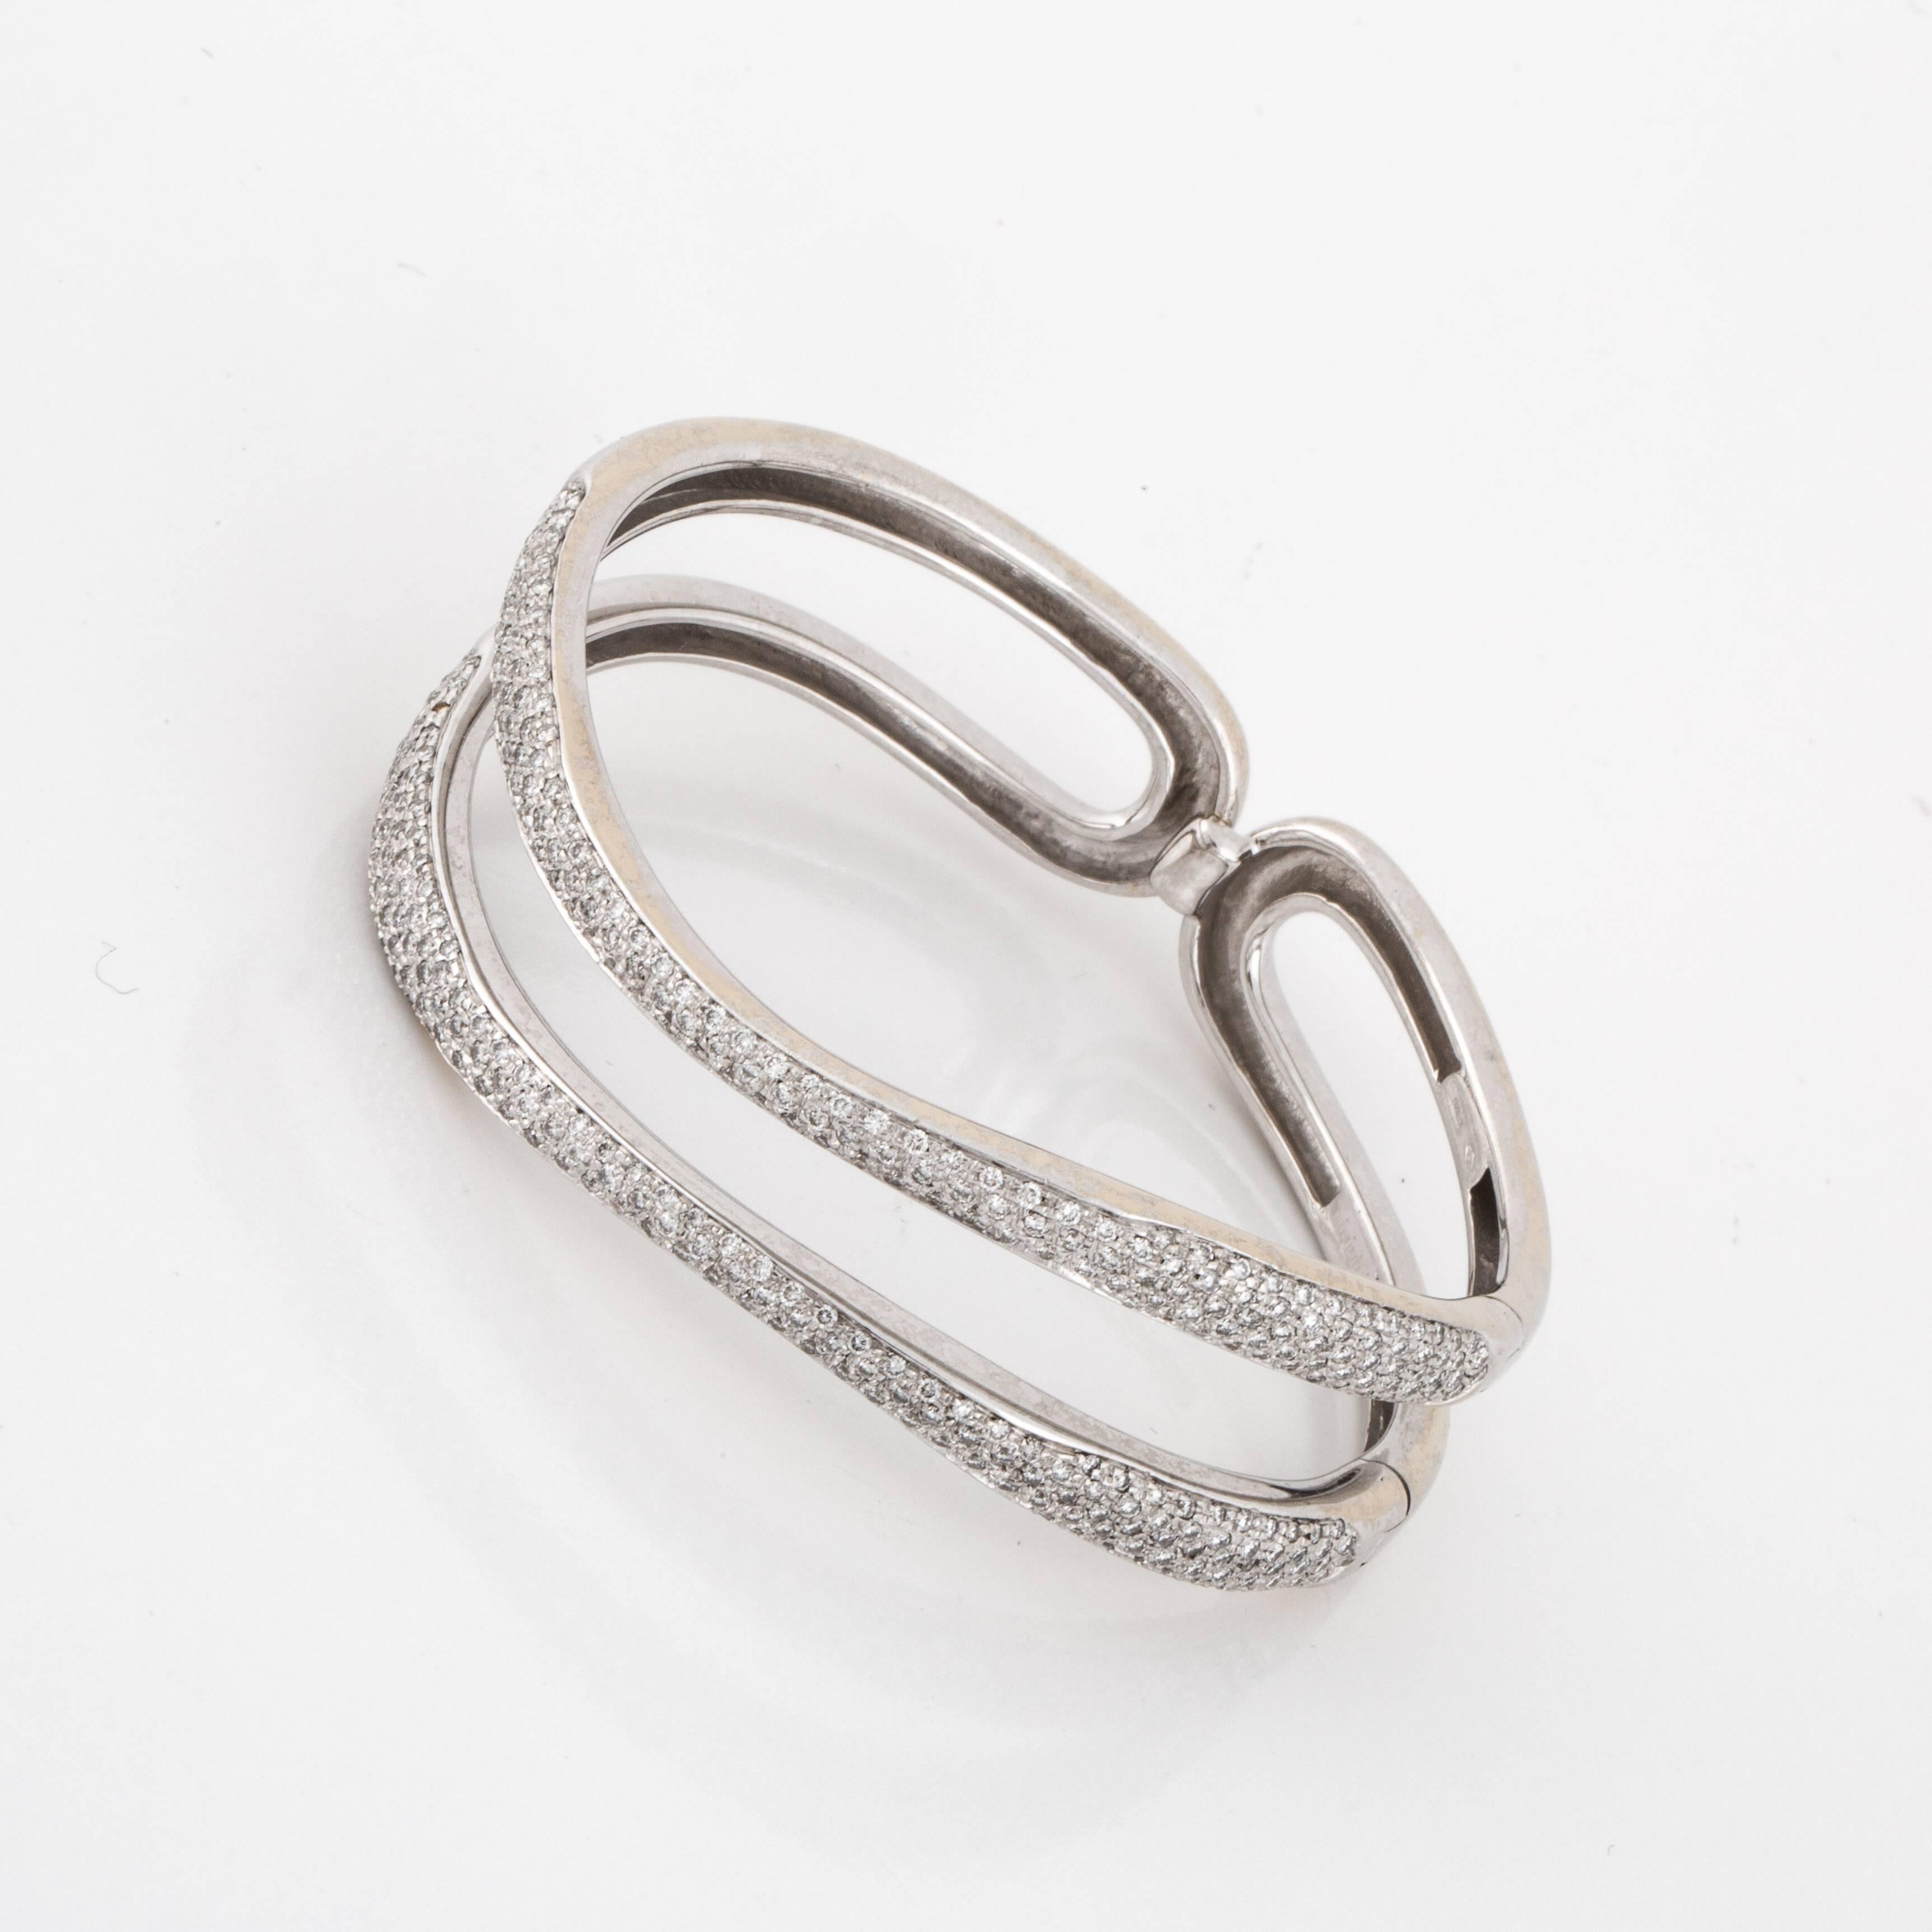 Antonini cuff bracelet in 18K white gold with pavé round diamonds.  Marked 